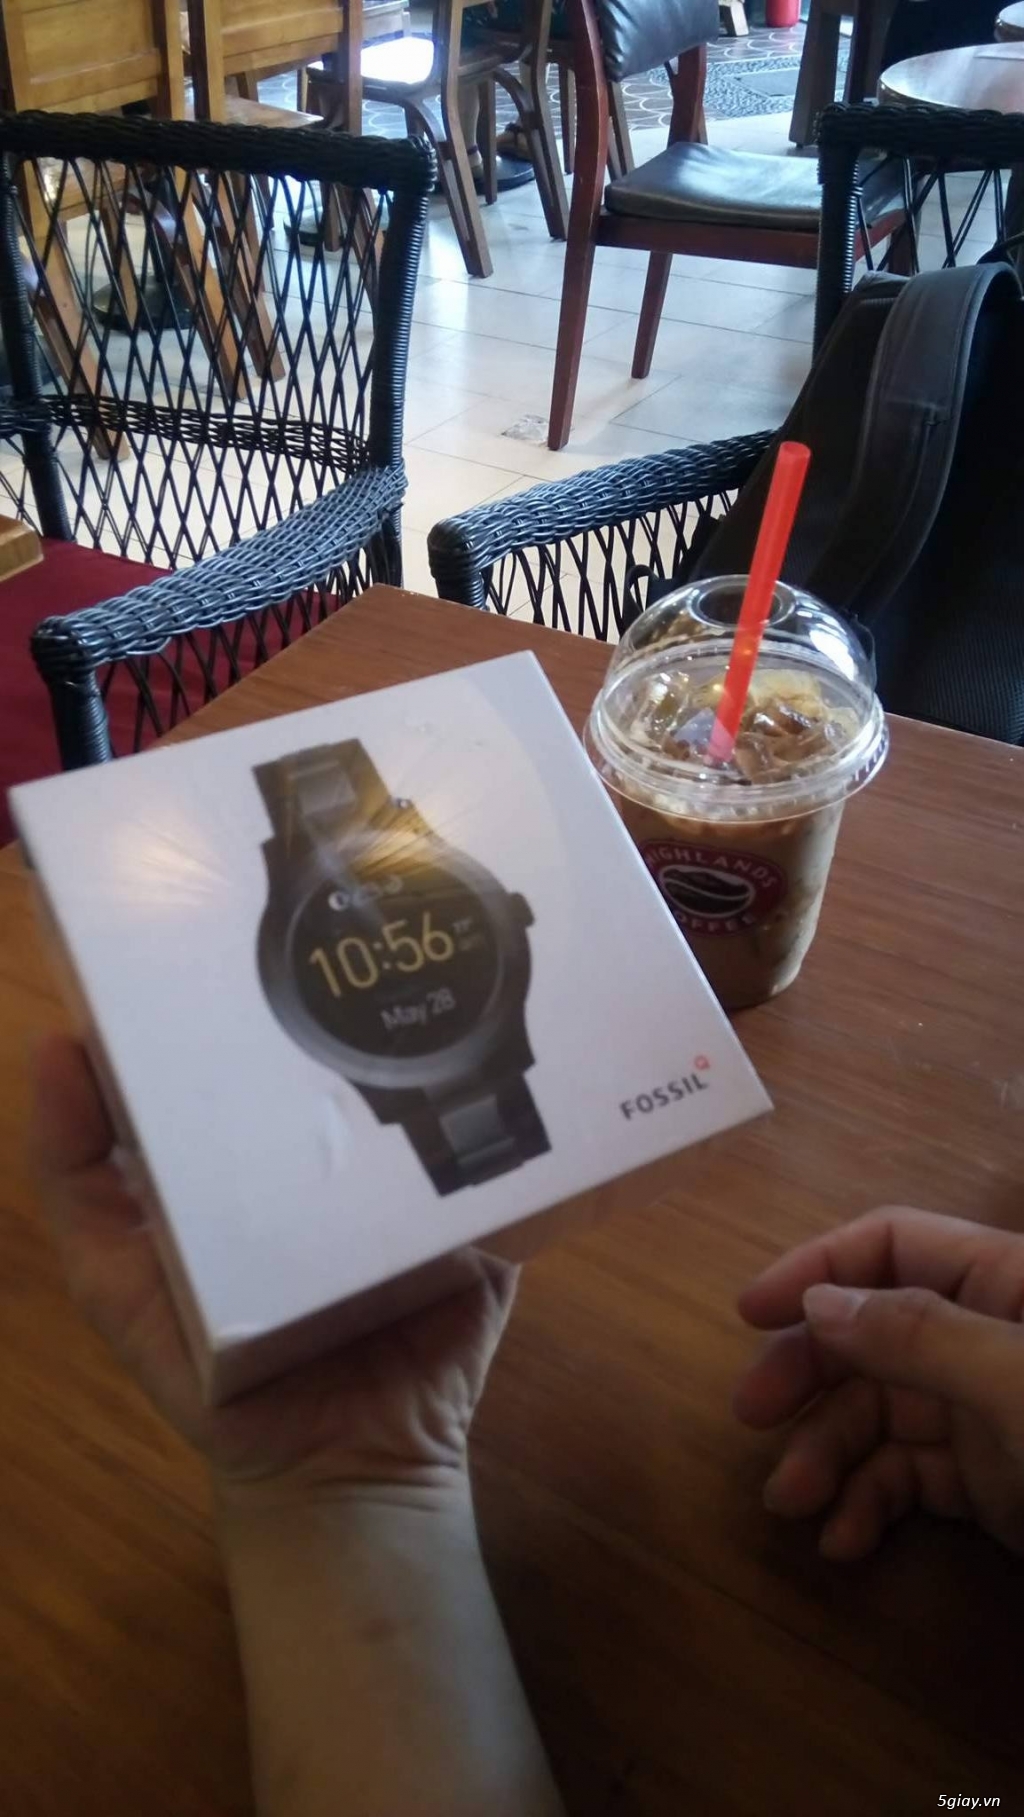 Fossil Smartwatch Q Founder Gen 2 Smart Watch - 3